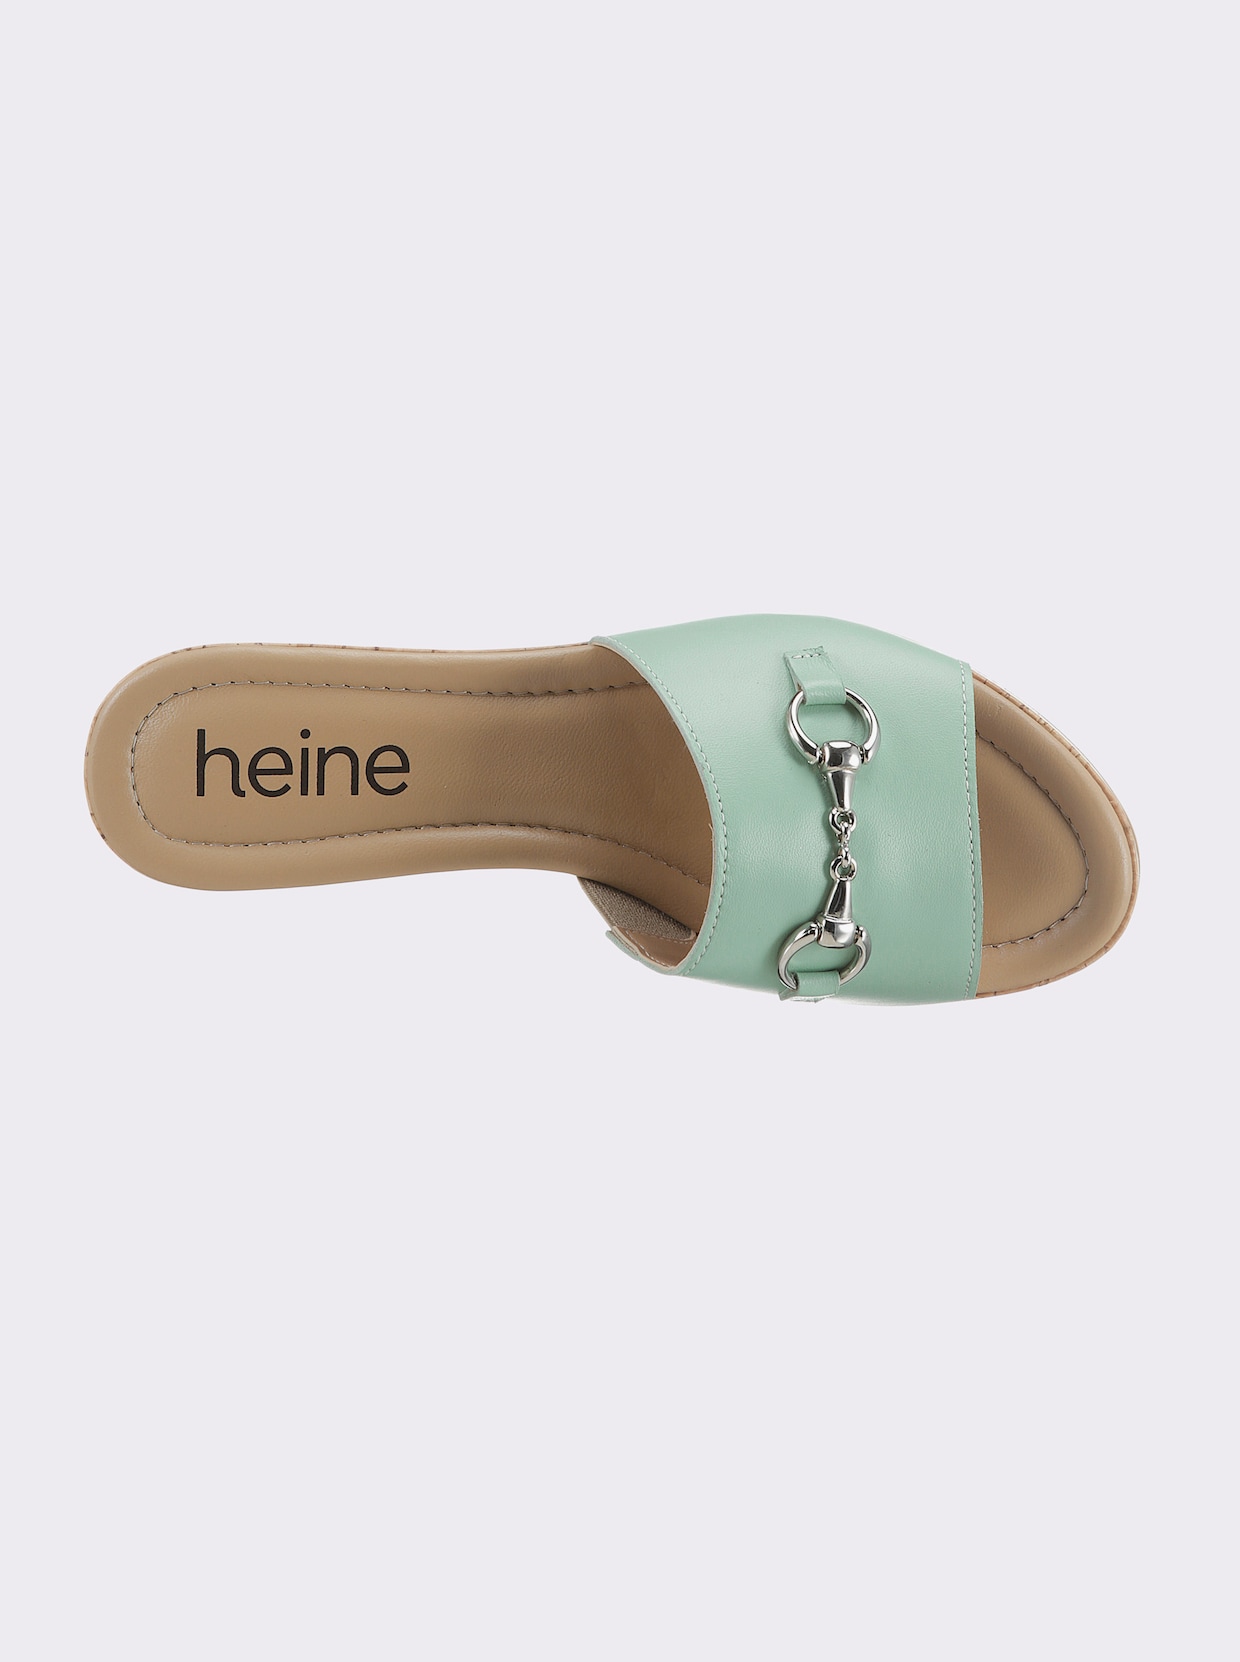 heine Slippers - mint